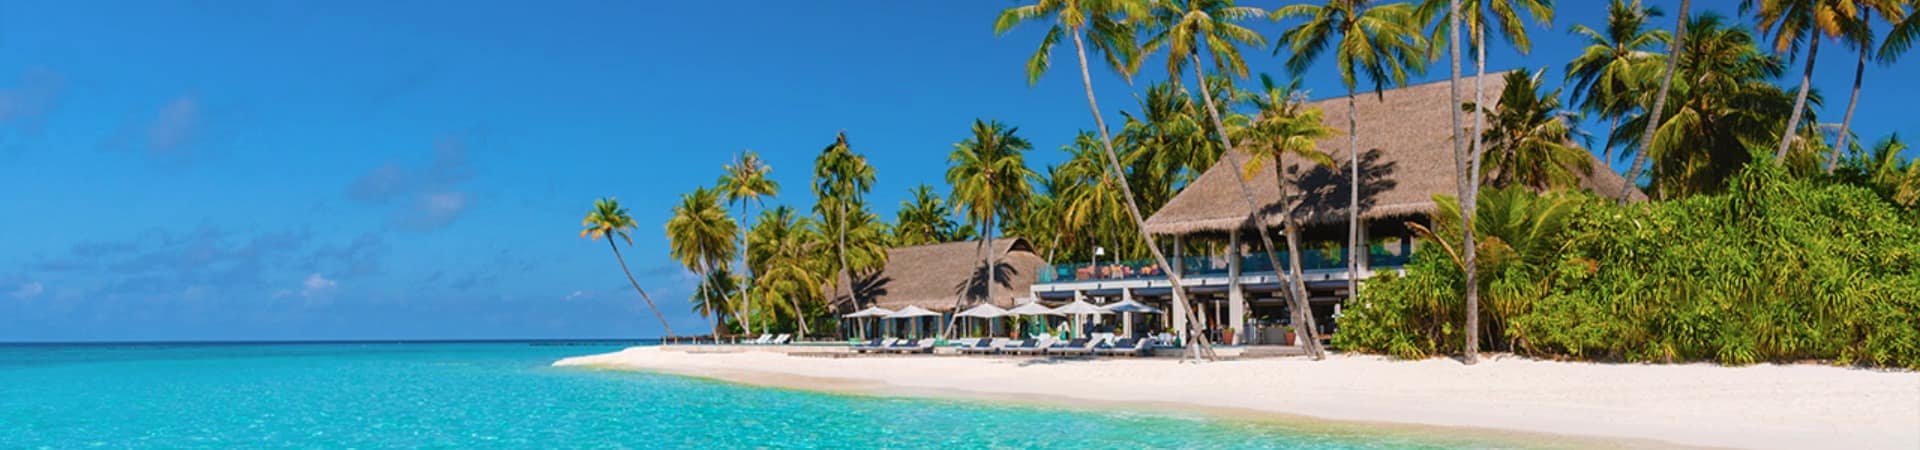 Maldivas velaa private island avi bar